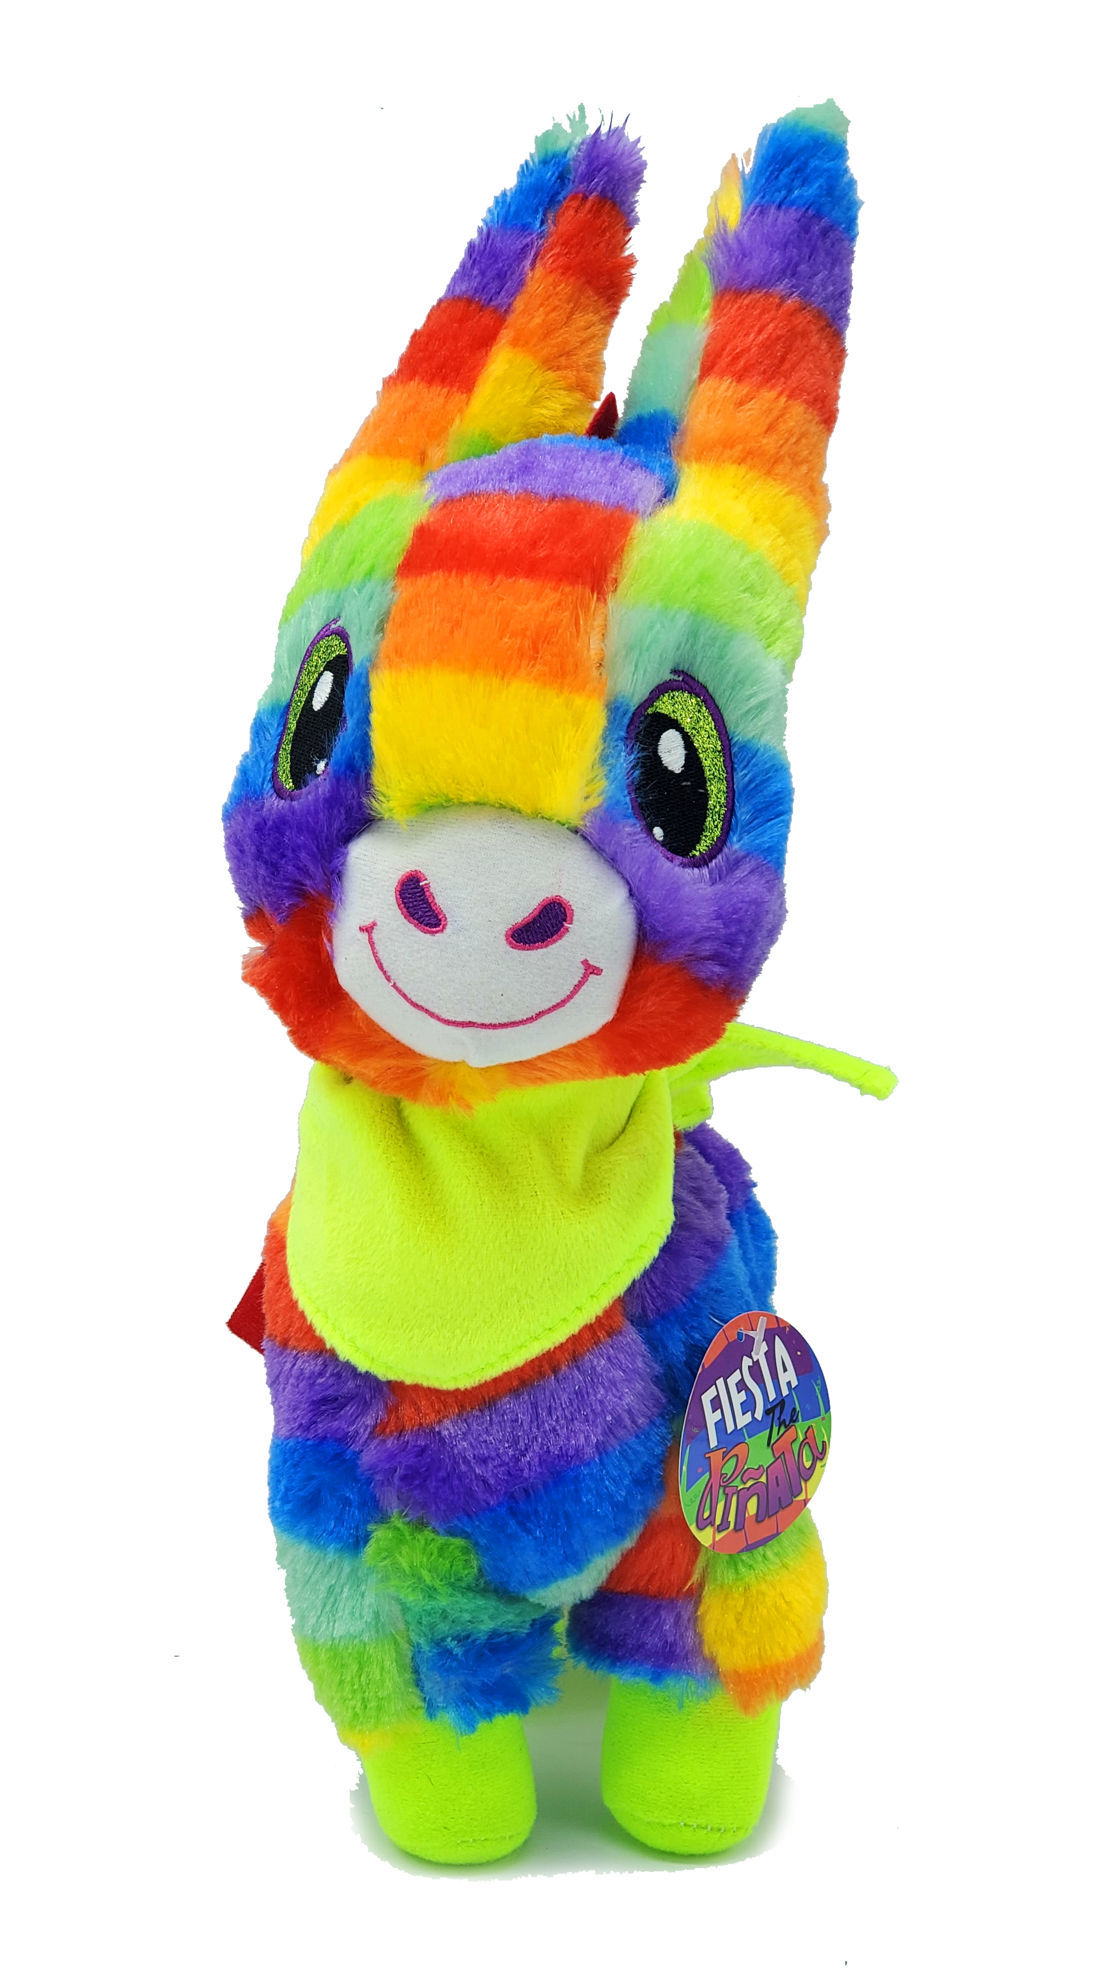 Picture of Rainbow Llama - Plush Toy